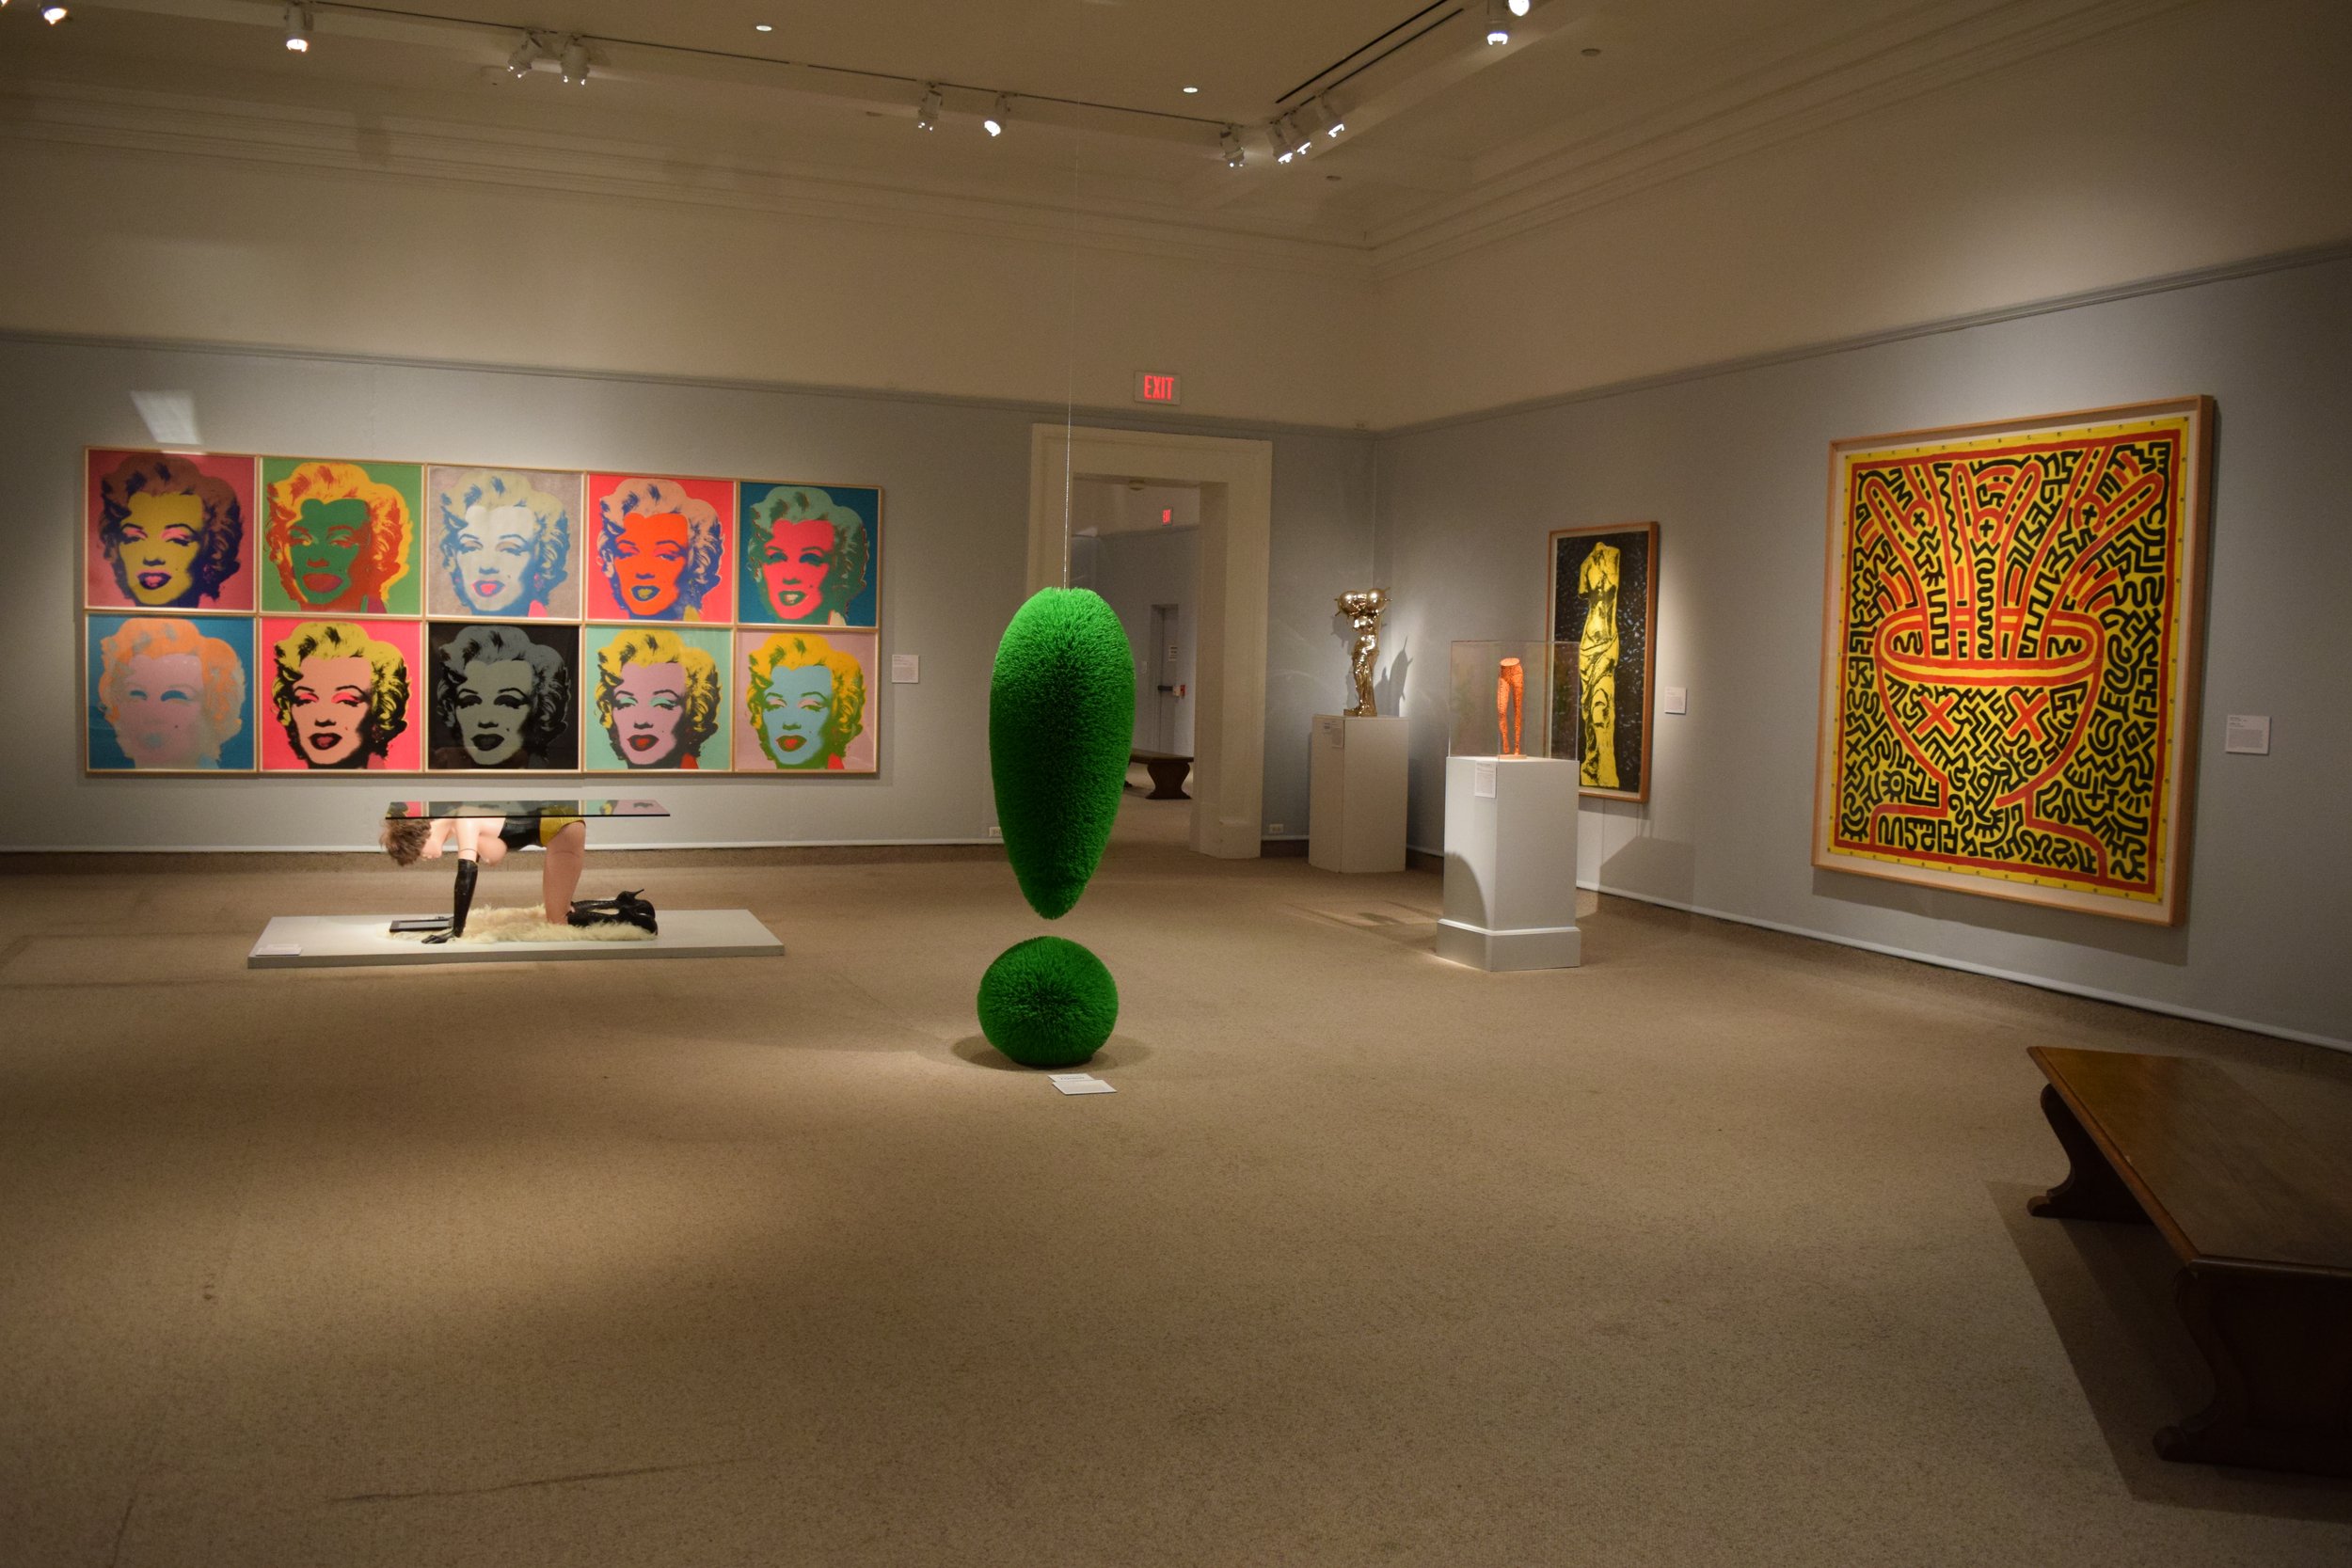  Andy Warhol,   Marilyn Monroe  (1967); Allen Jones,  Table  (1969); Richard Artschwager,  Exclamation Point   (1997); Joel Morrison,  Venus/Jesus Lizzard  (2006); Jim Dine,  The Yellow Venus  (1984); Keith Haring &amp; L.A. 2,  Untitled  (1983); Kei